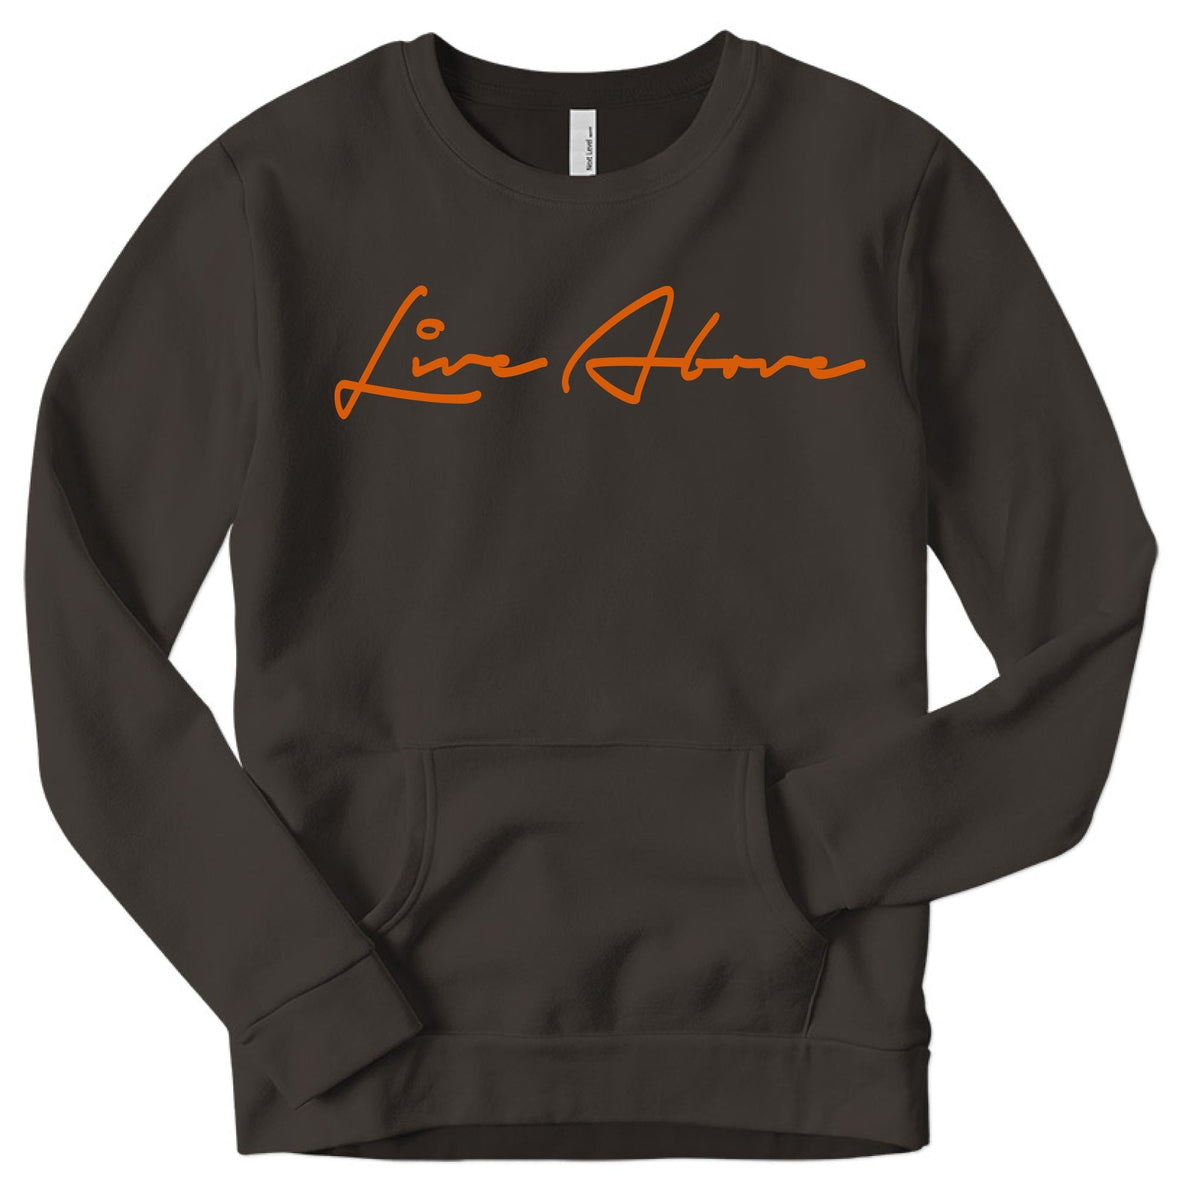 Signature Live Above Pocket Sweatshirt- Smoke Grey/Orange - The Shade Room Shop